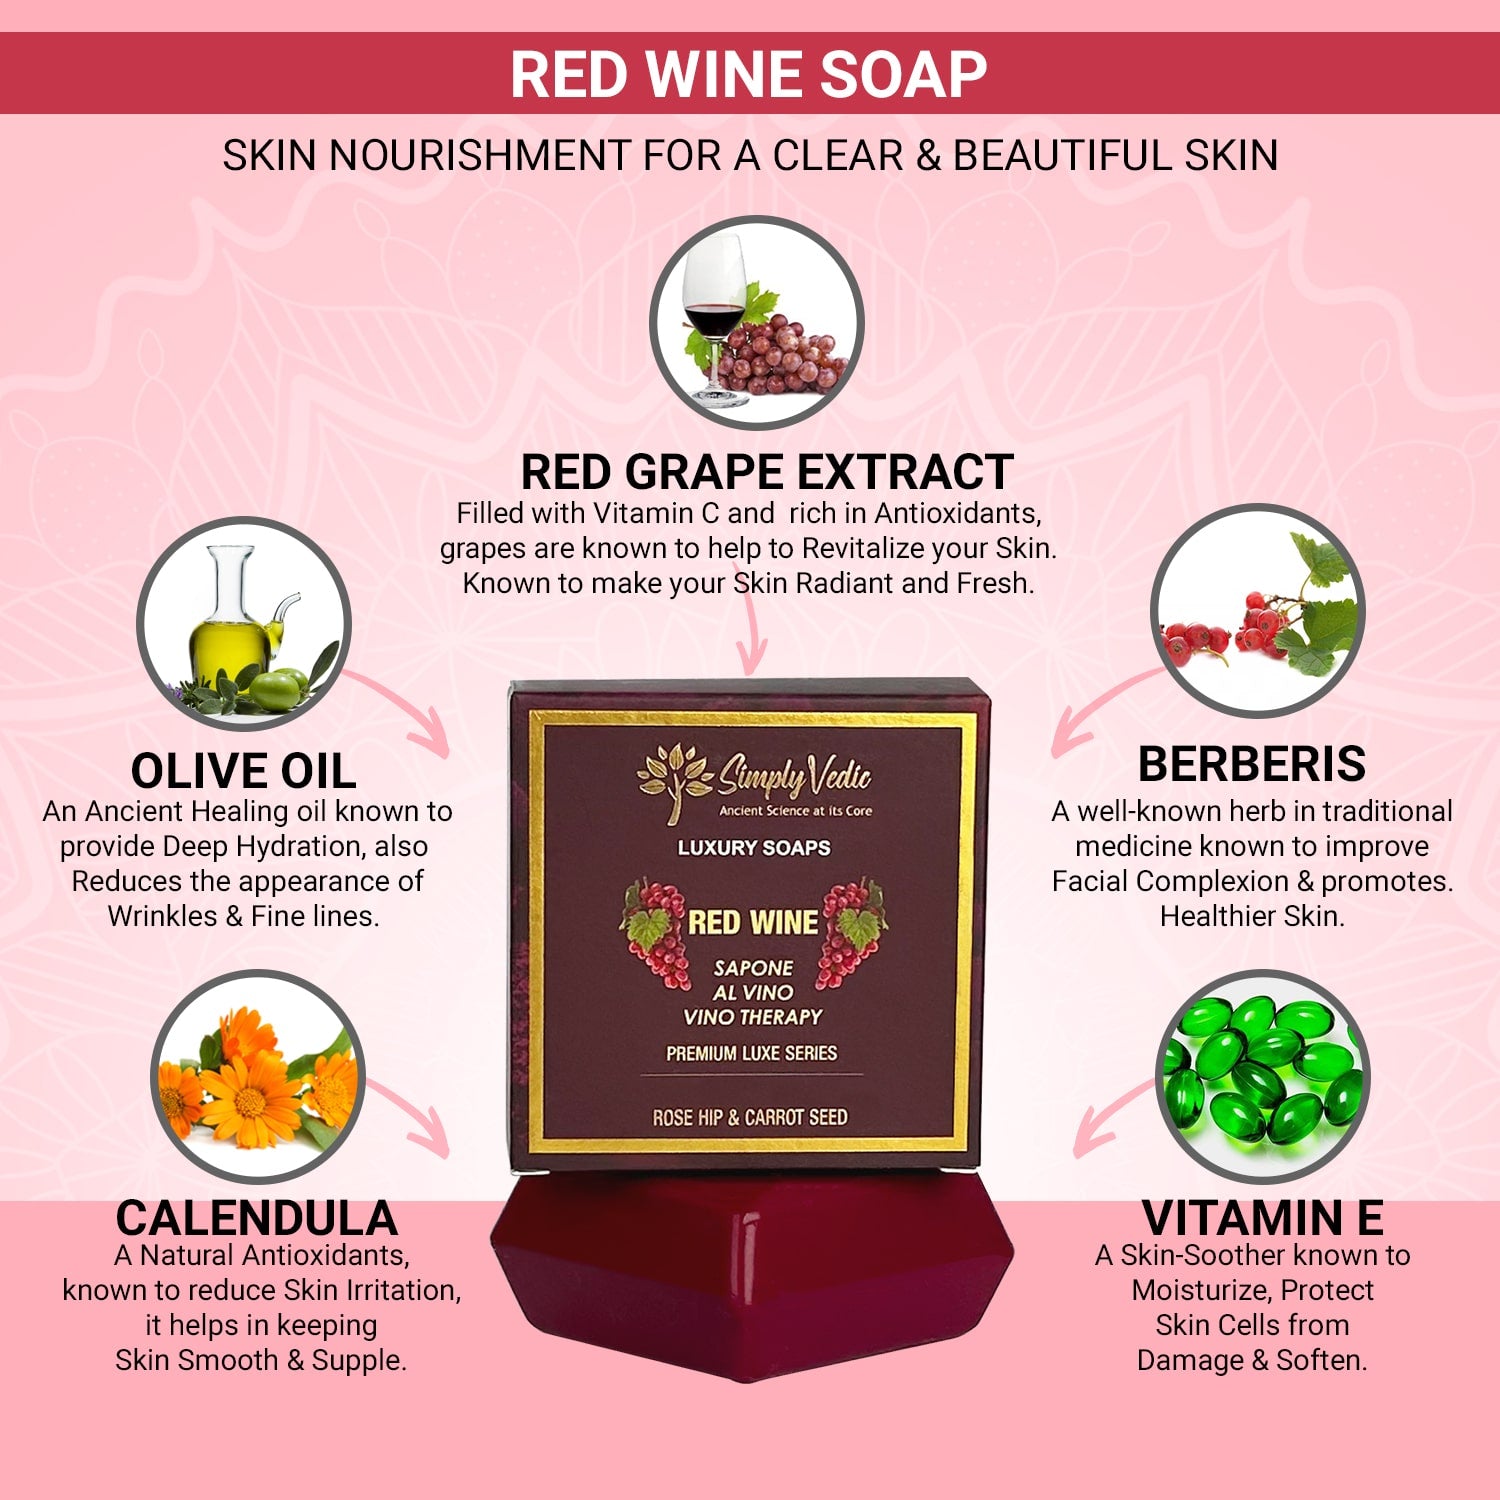 Luxury Red Wine Soap Bar